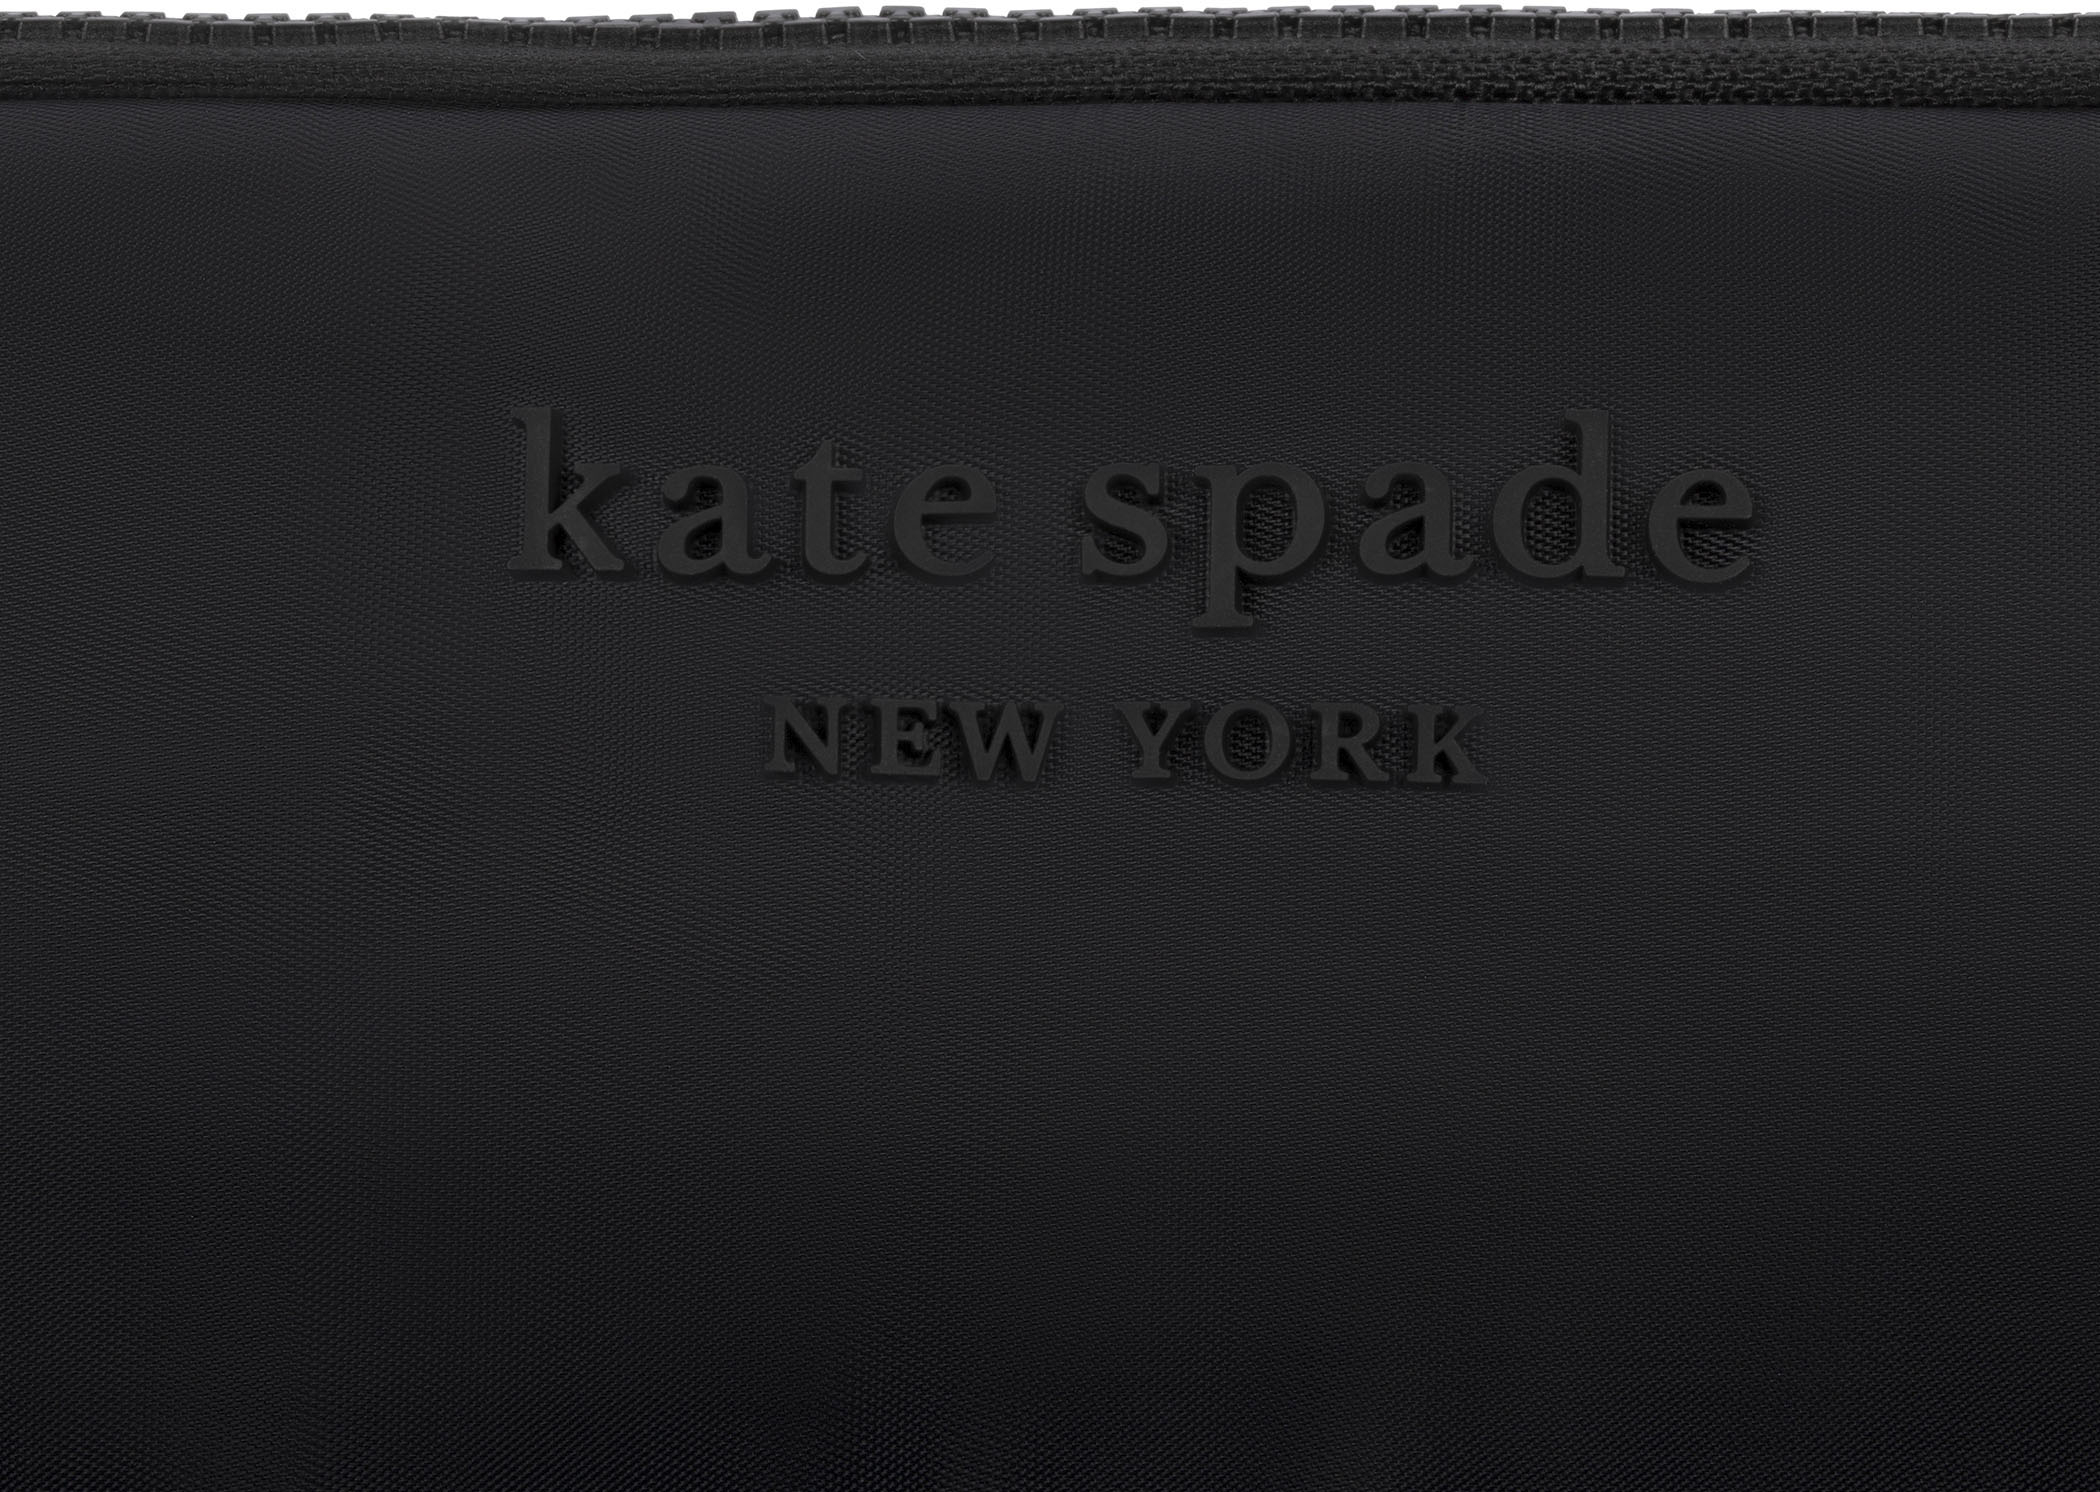 Incipio Kate Spade New York Puffer Universal Laptop Sleeve Up to 16 Laptop Case - Hollyhock Iridescent Black - KSMB-025-HHIRB